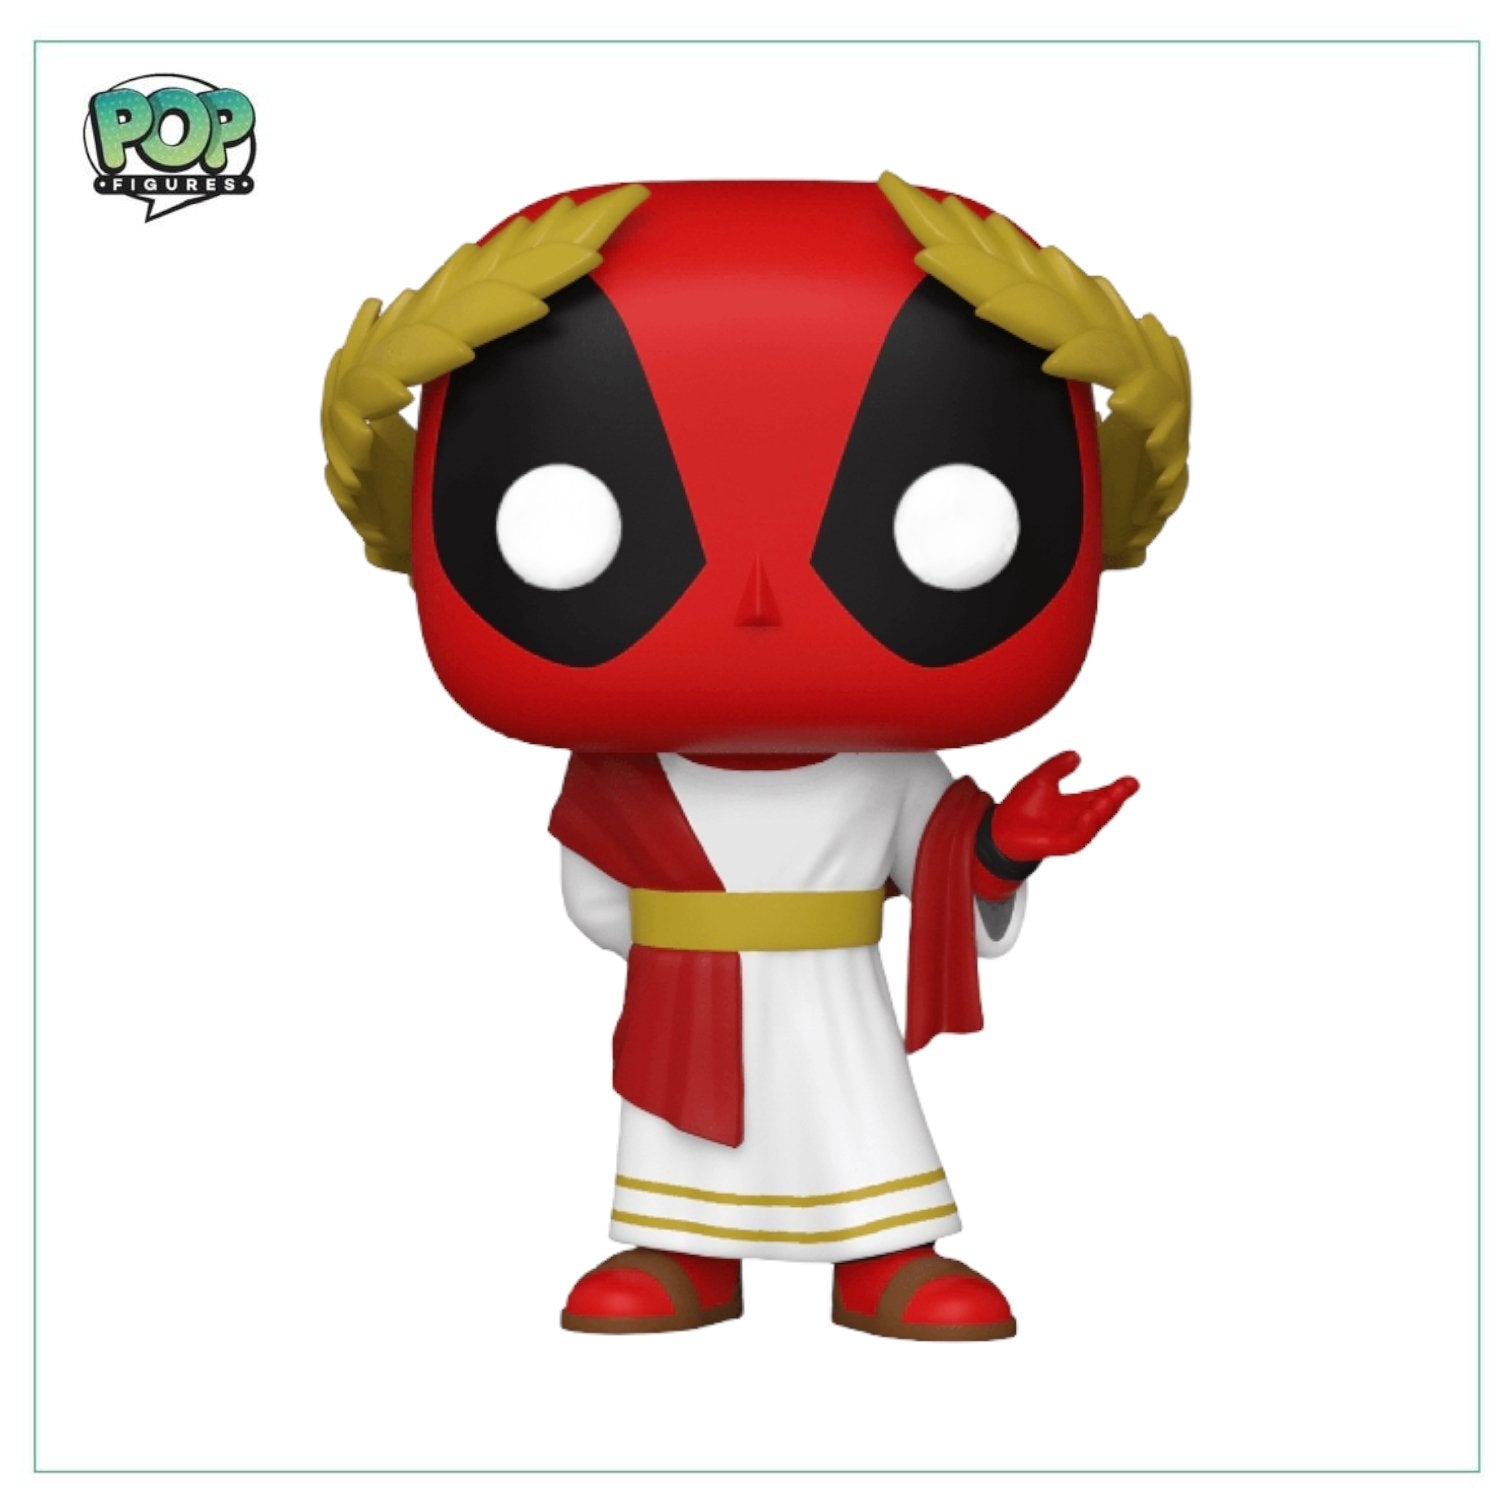 Funko Spielfigur Marvel Deadpool - Deadpool Roman Senator 779 Pop!